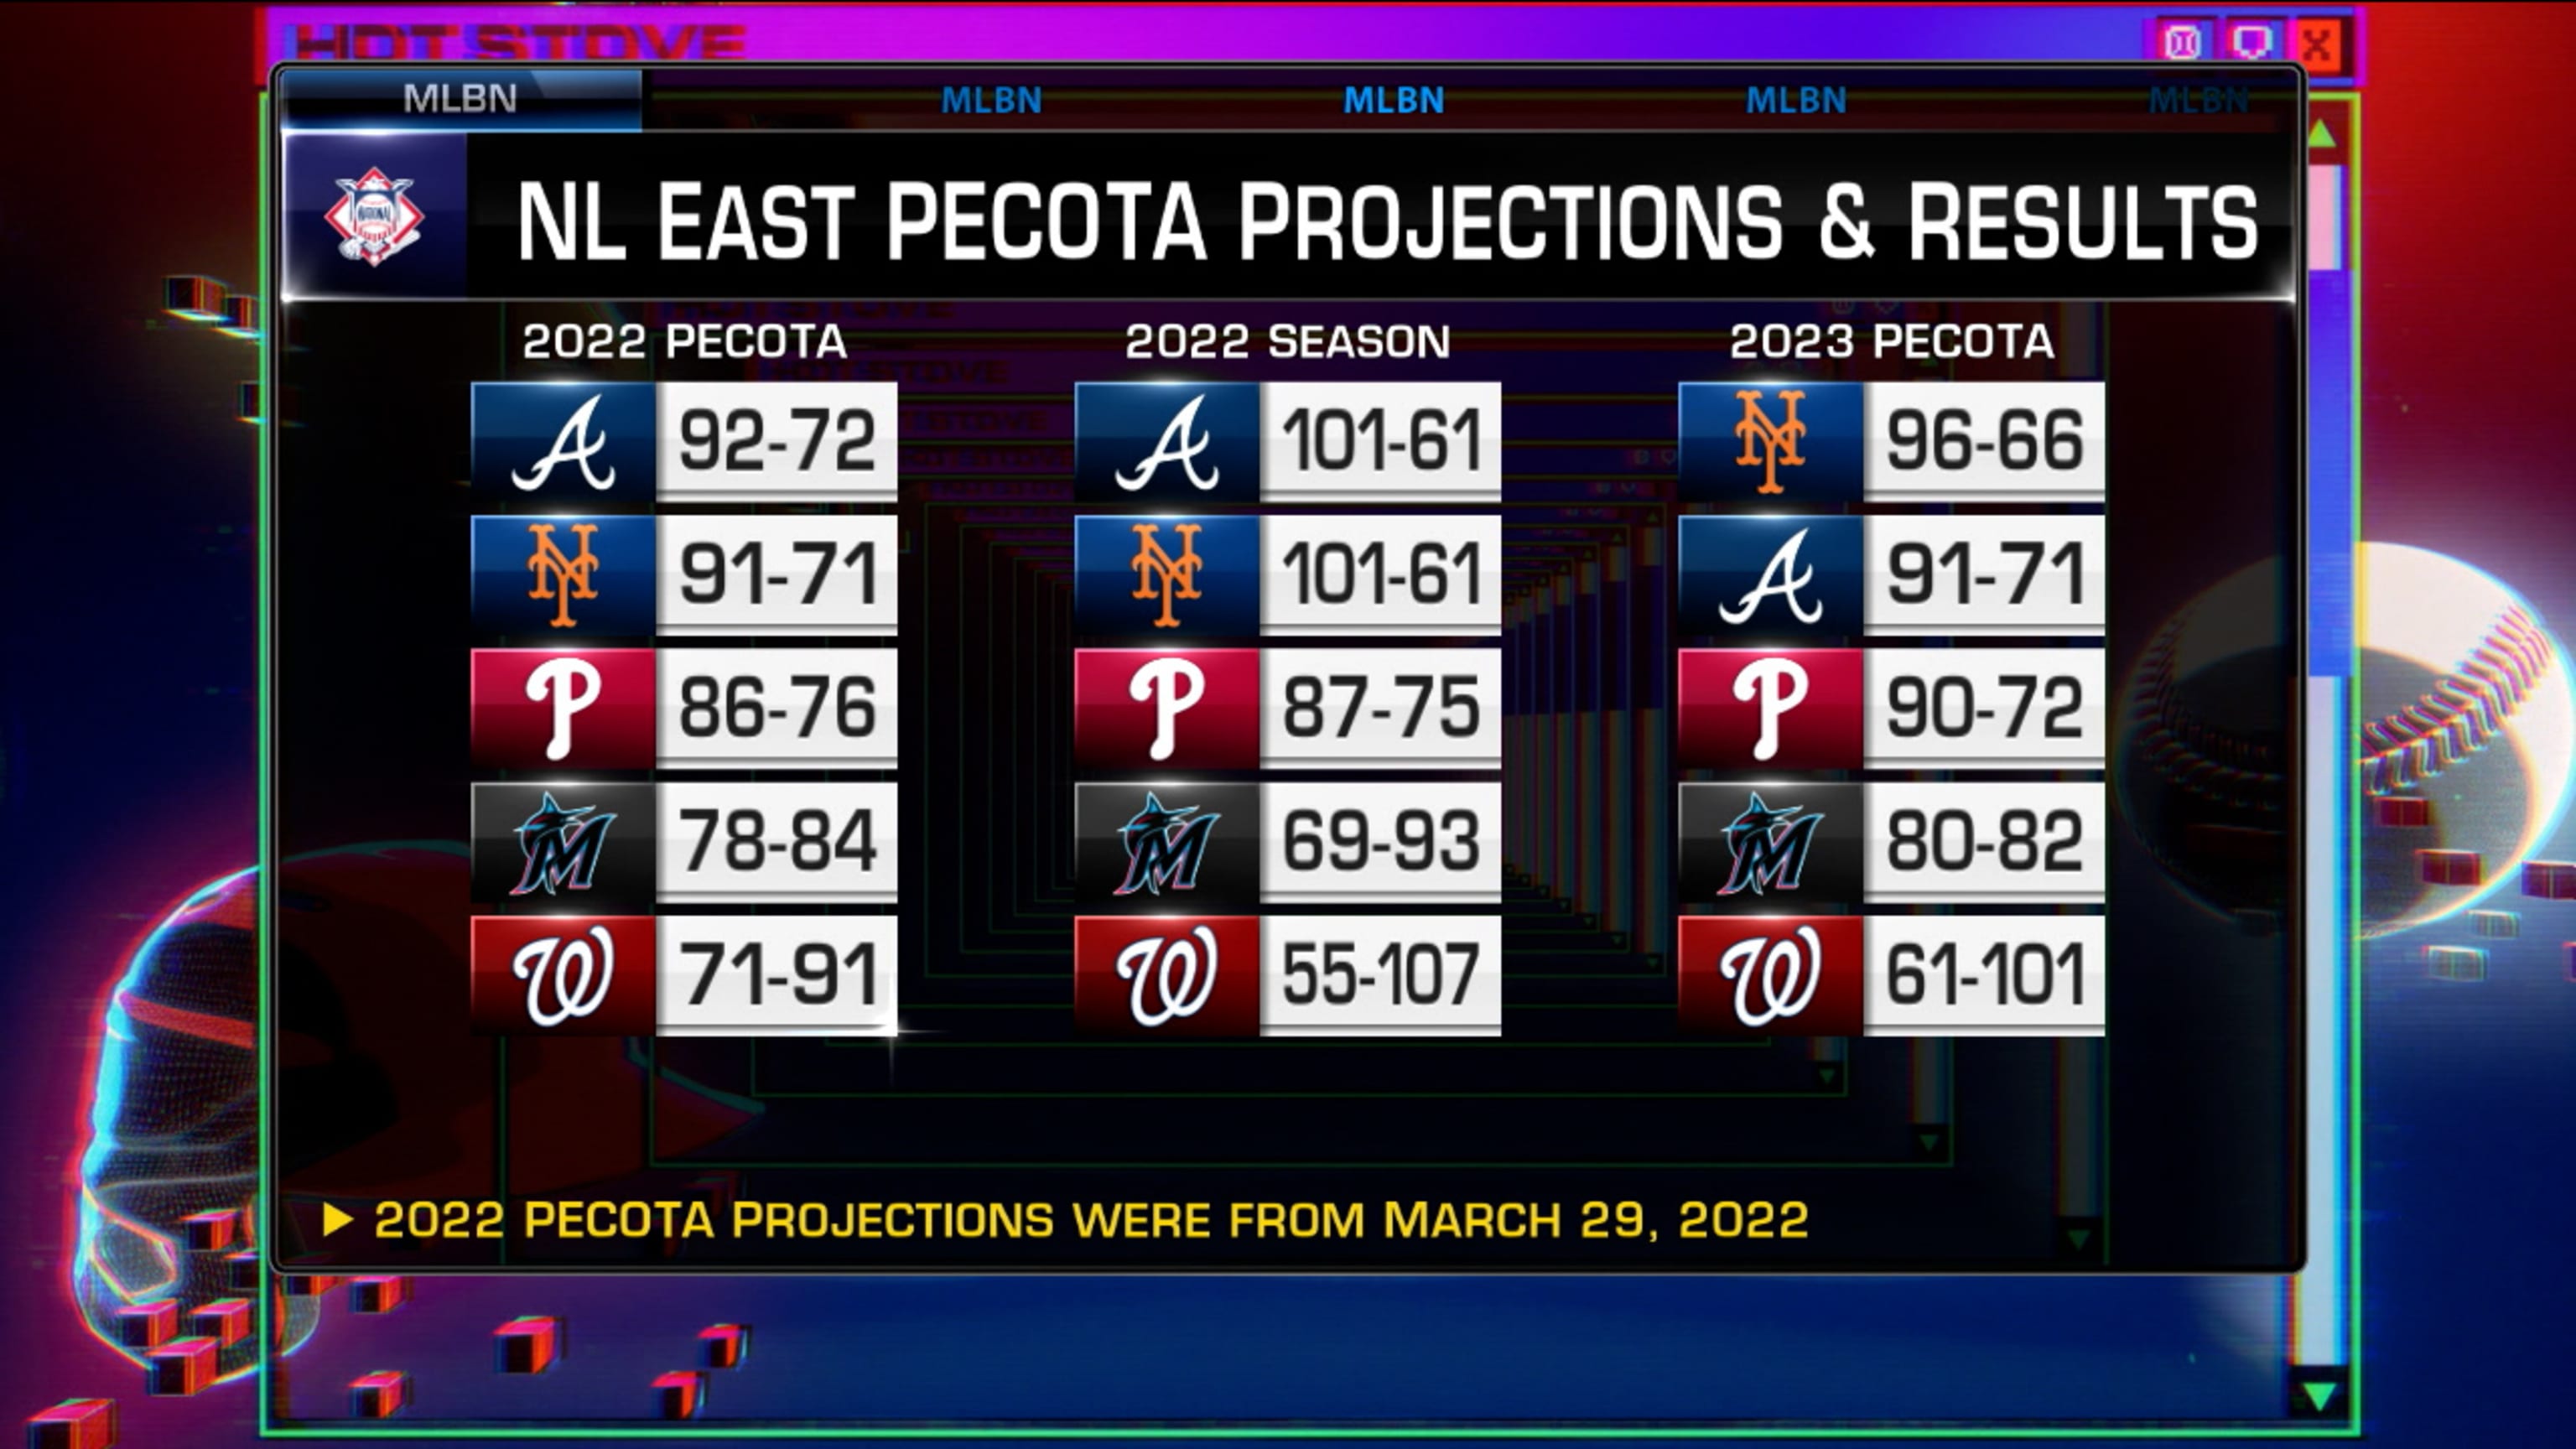 MLB World Series, division winner predictions for 2023